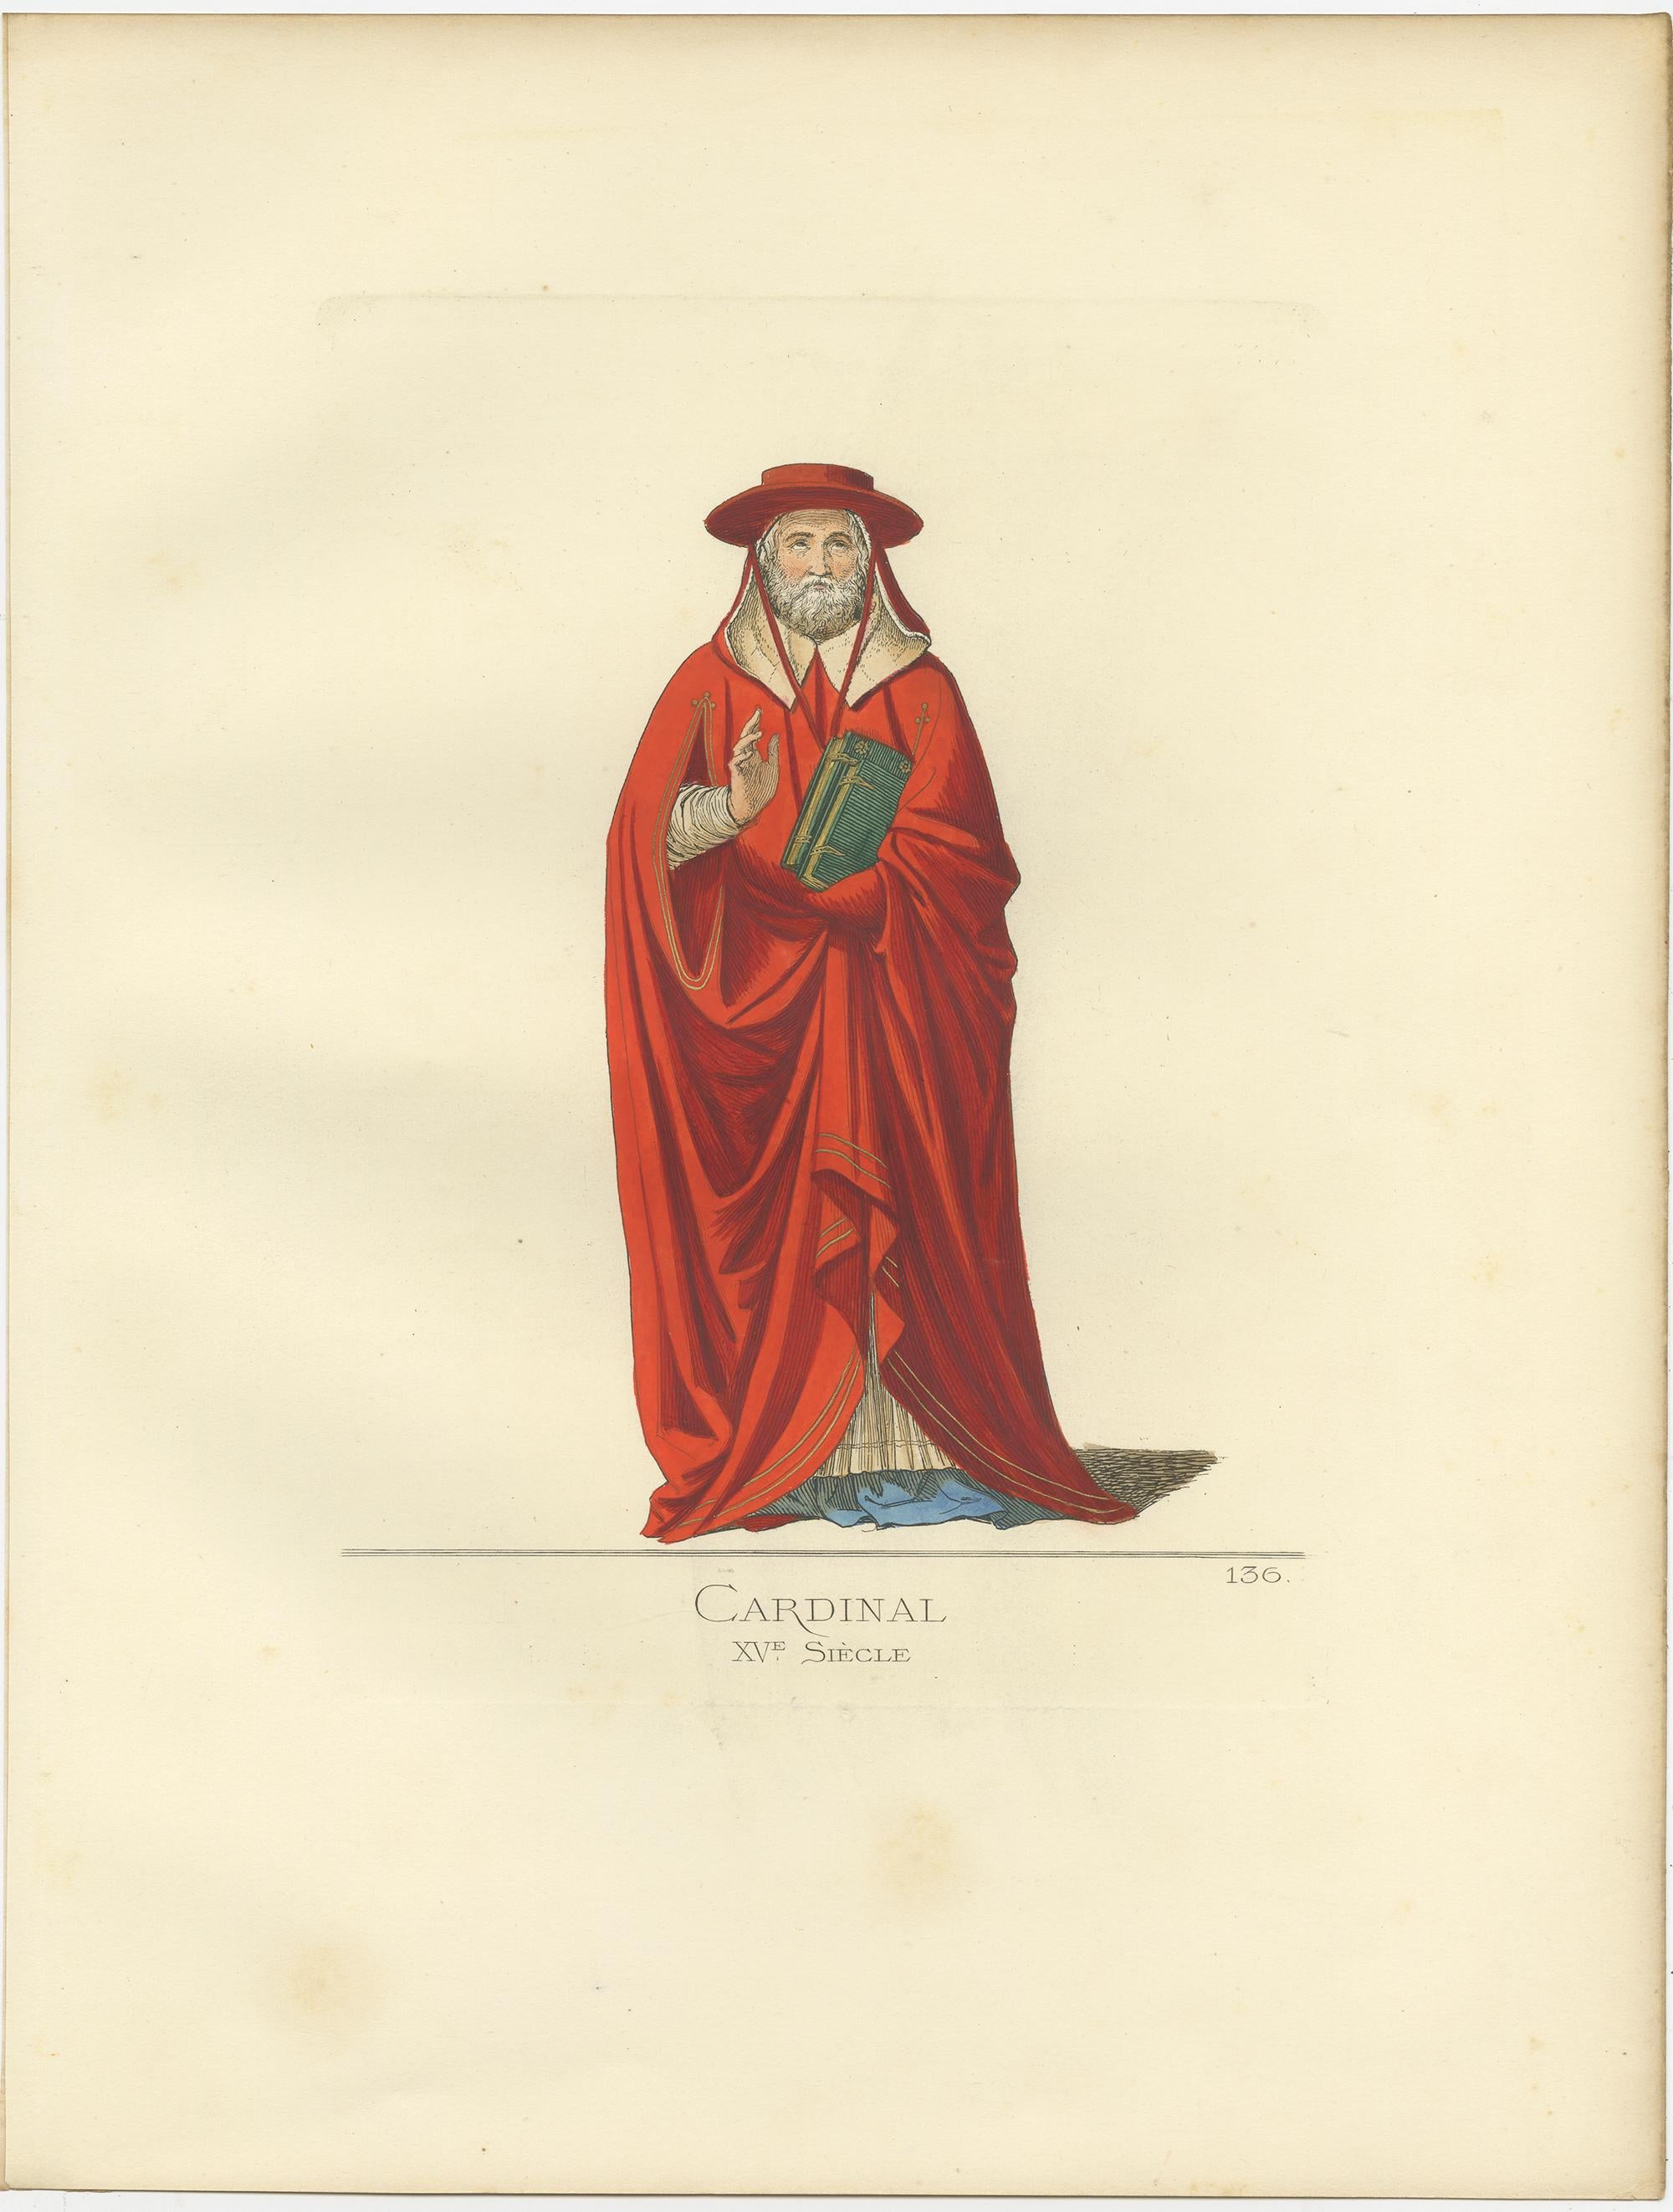 19th Century Antique Print of a Cardinal, 15th Century, by Bonnard, 1860